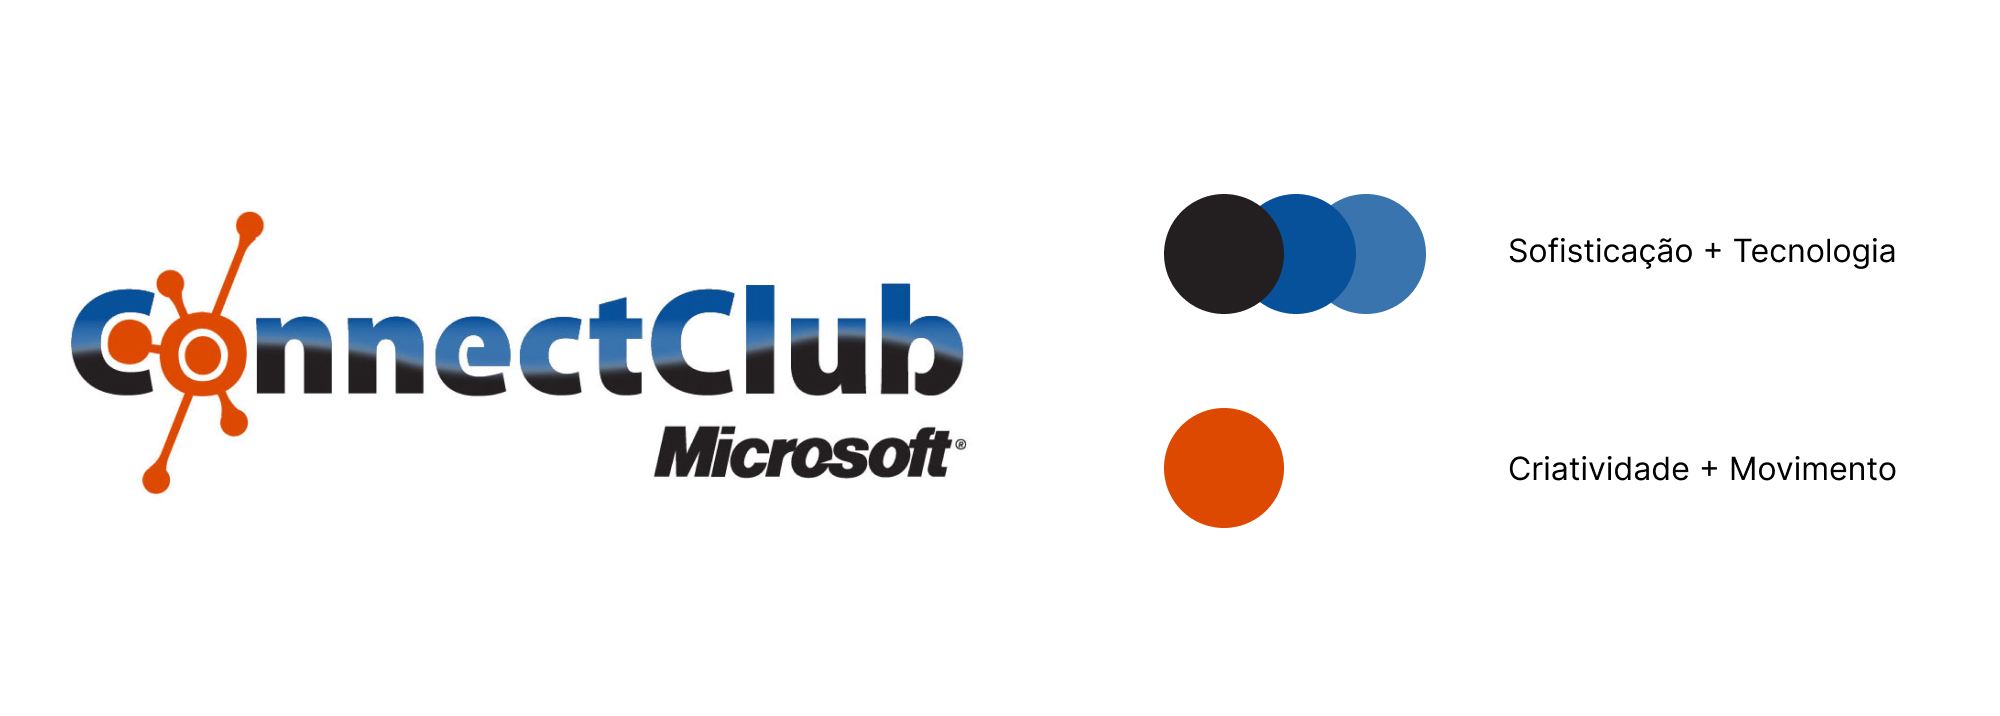 Logo para campanha Connect Club Microsoft